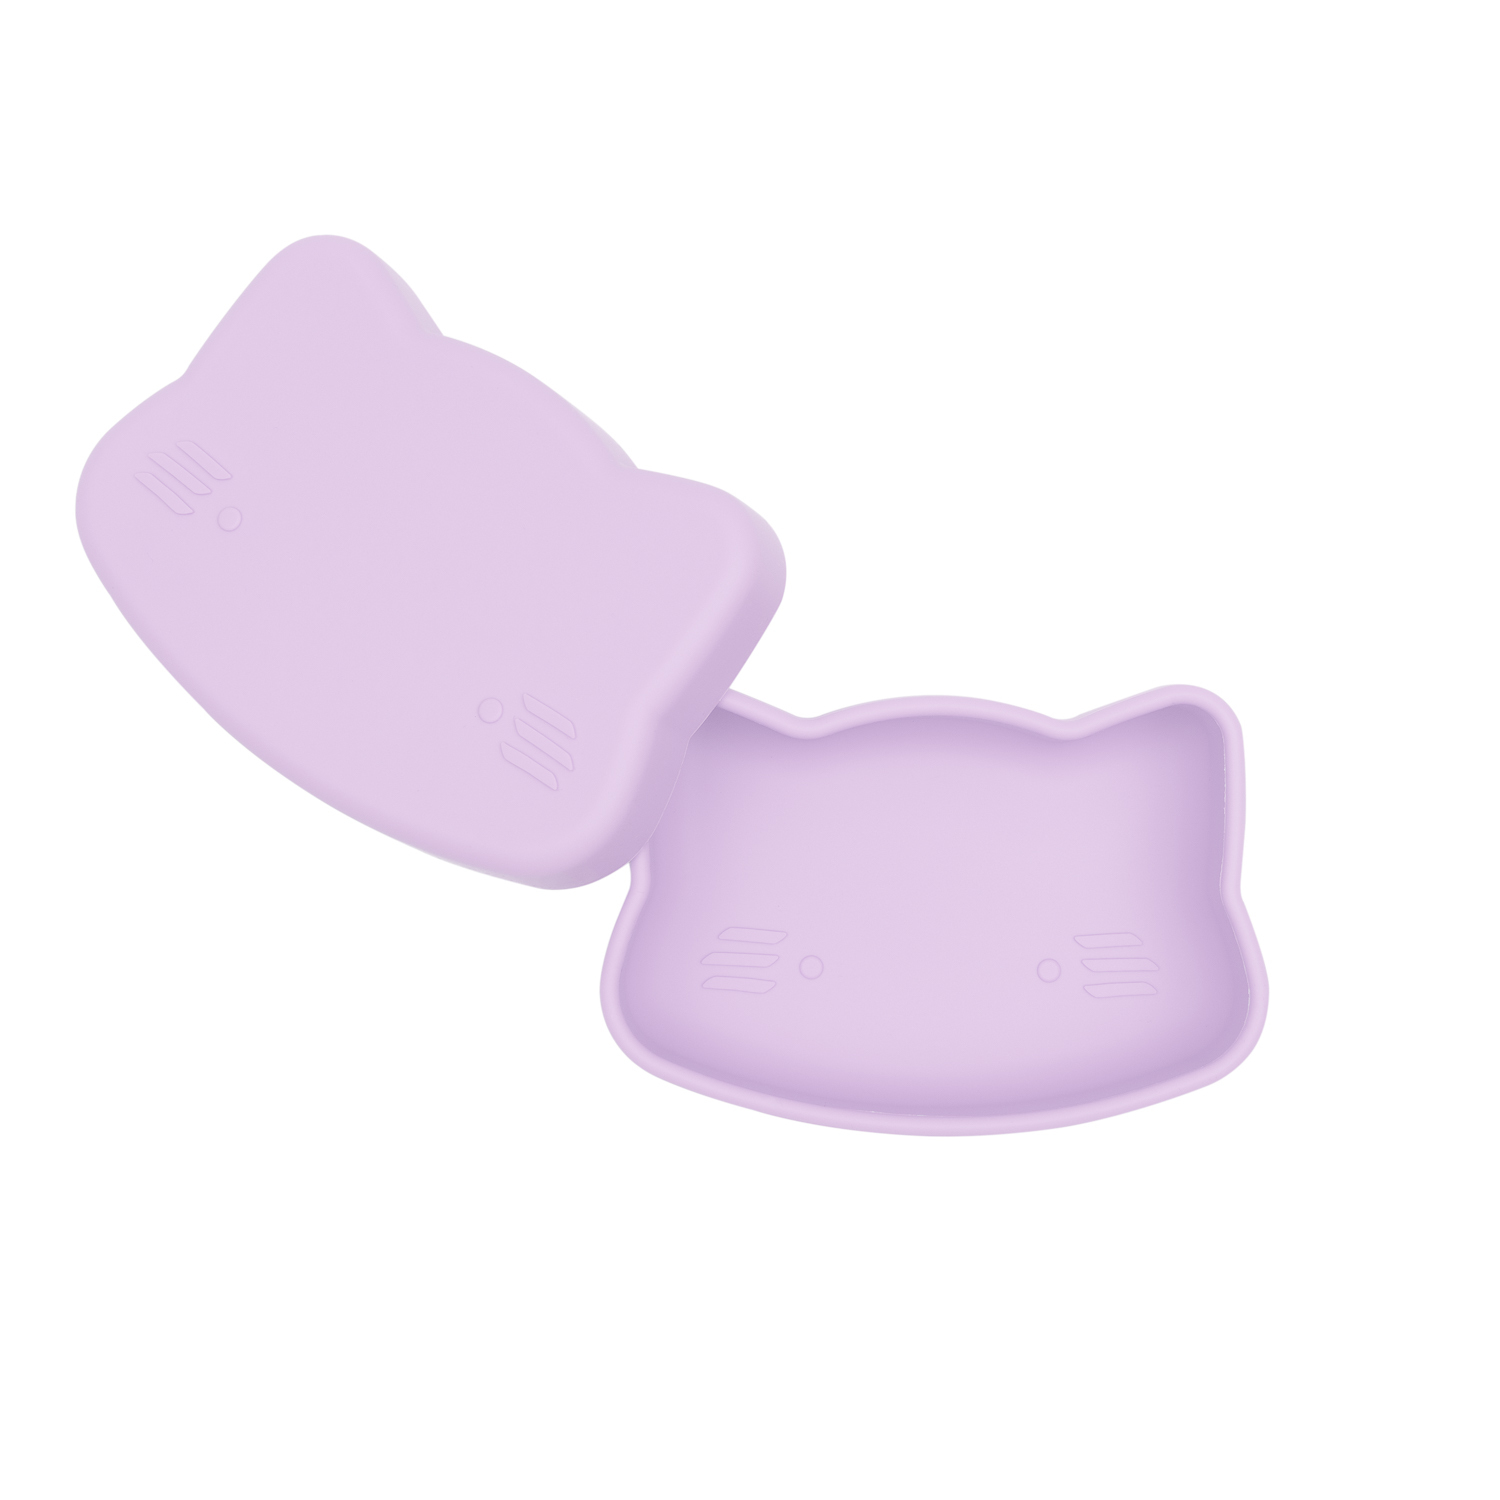 Cat snackie lid open - Lilac (low).JPG